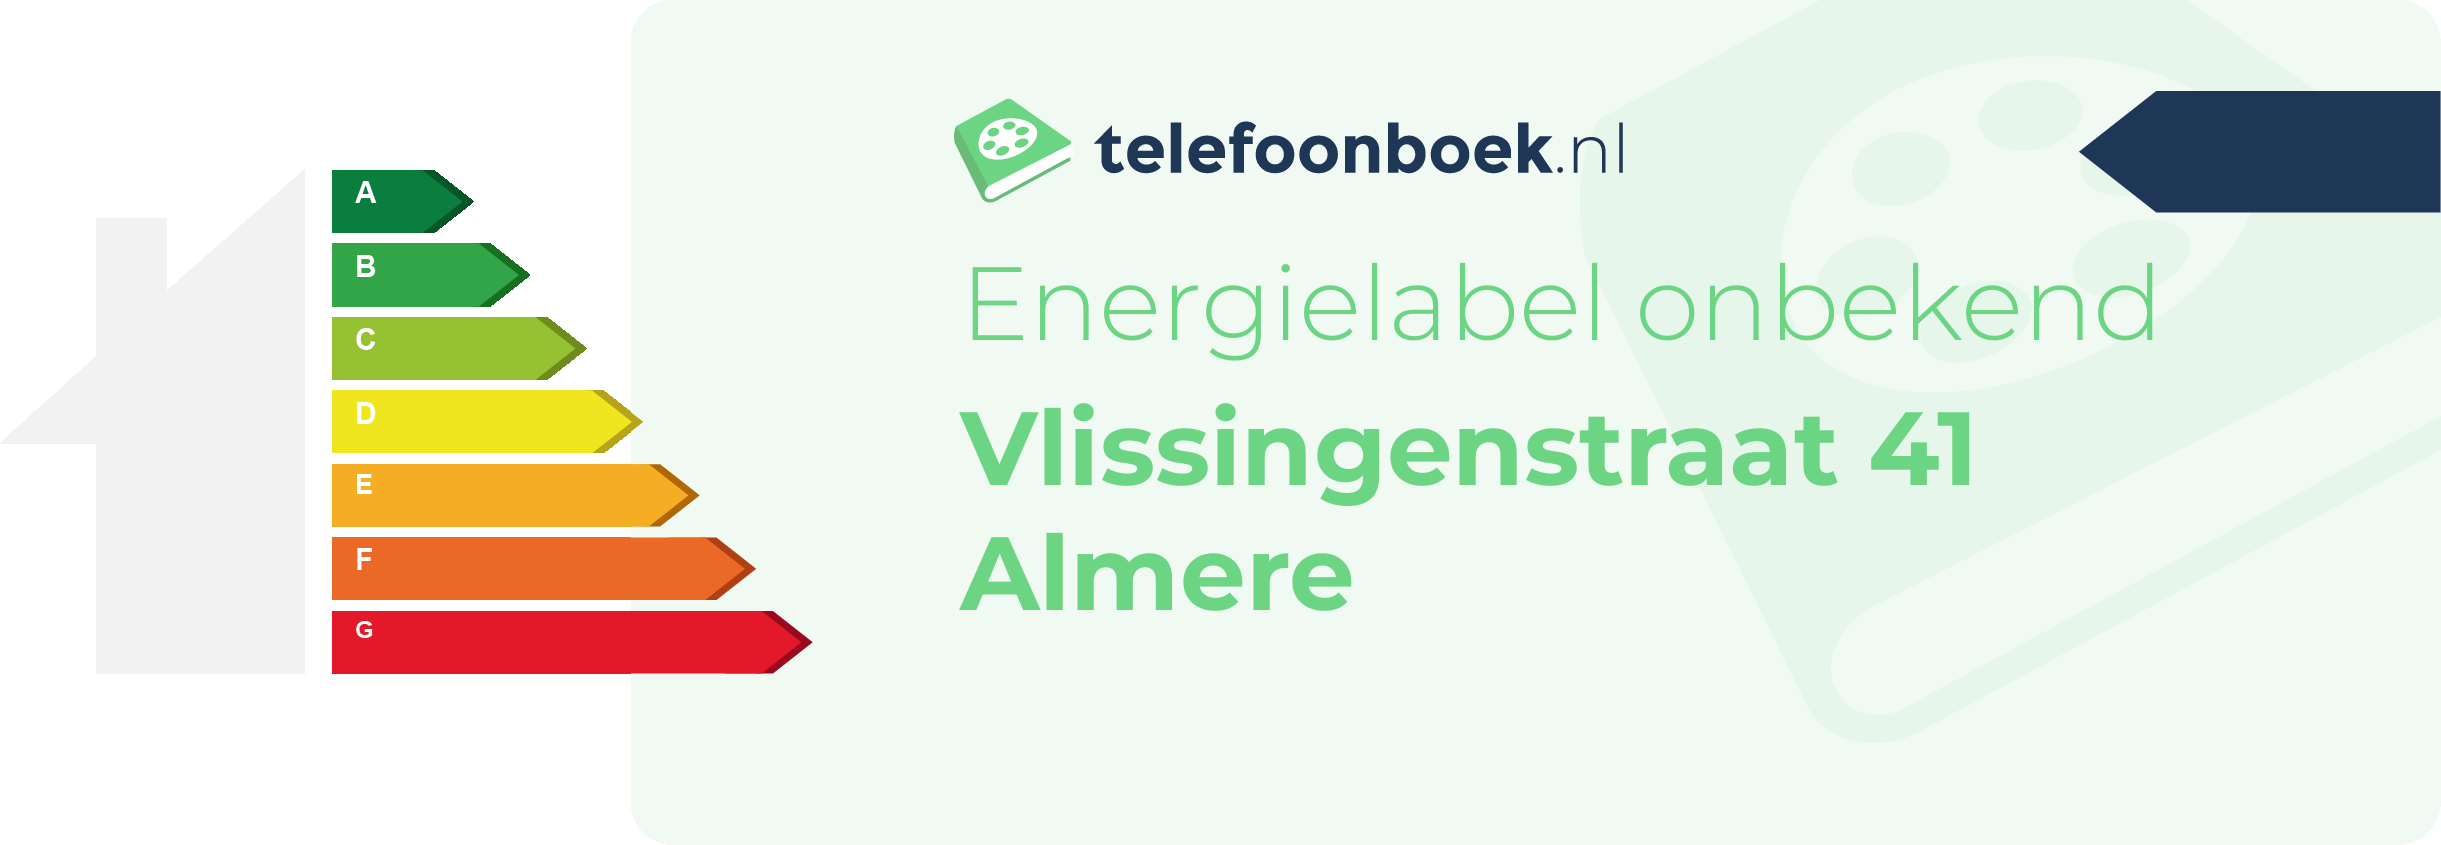 Energielabel Vlissingenstraat 41 Almere